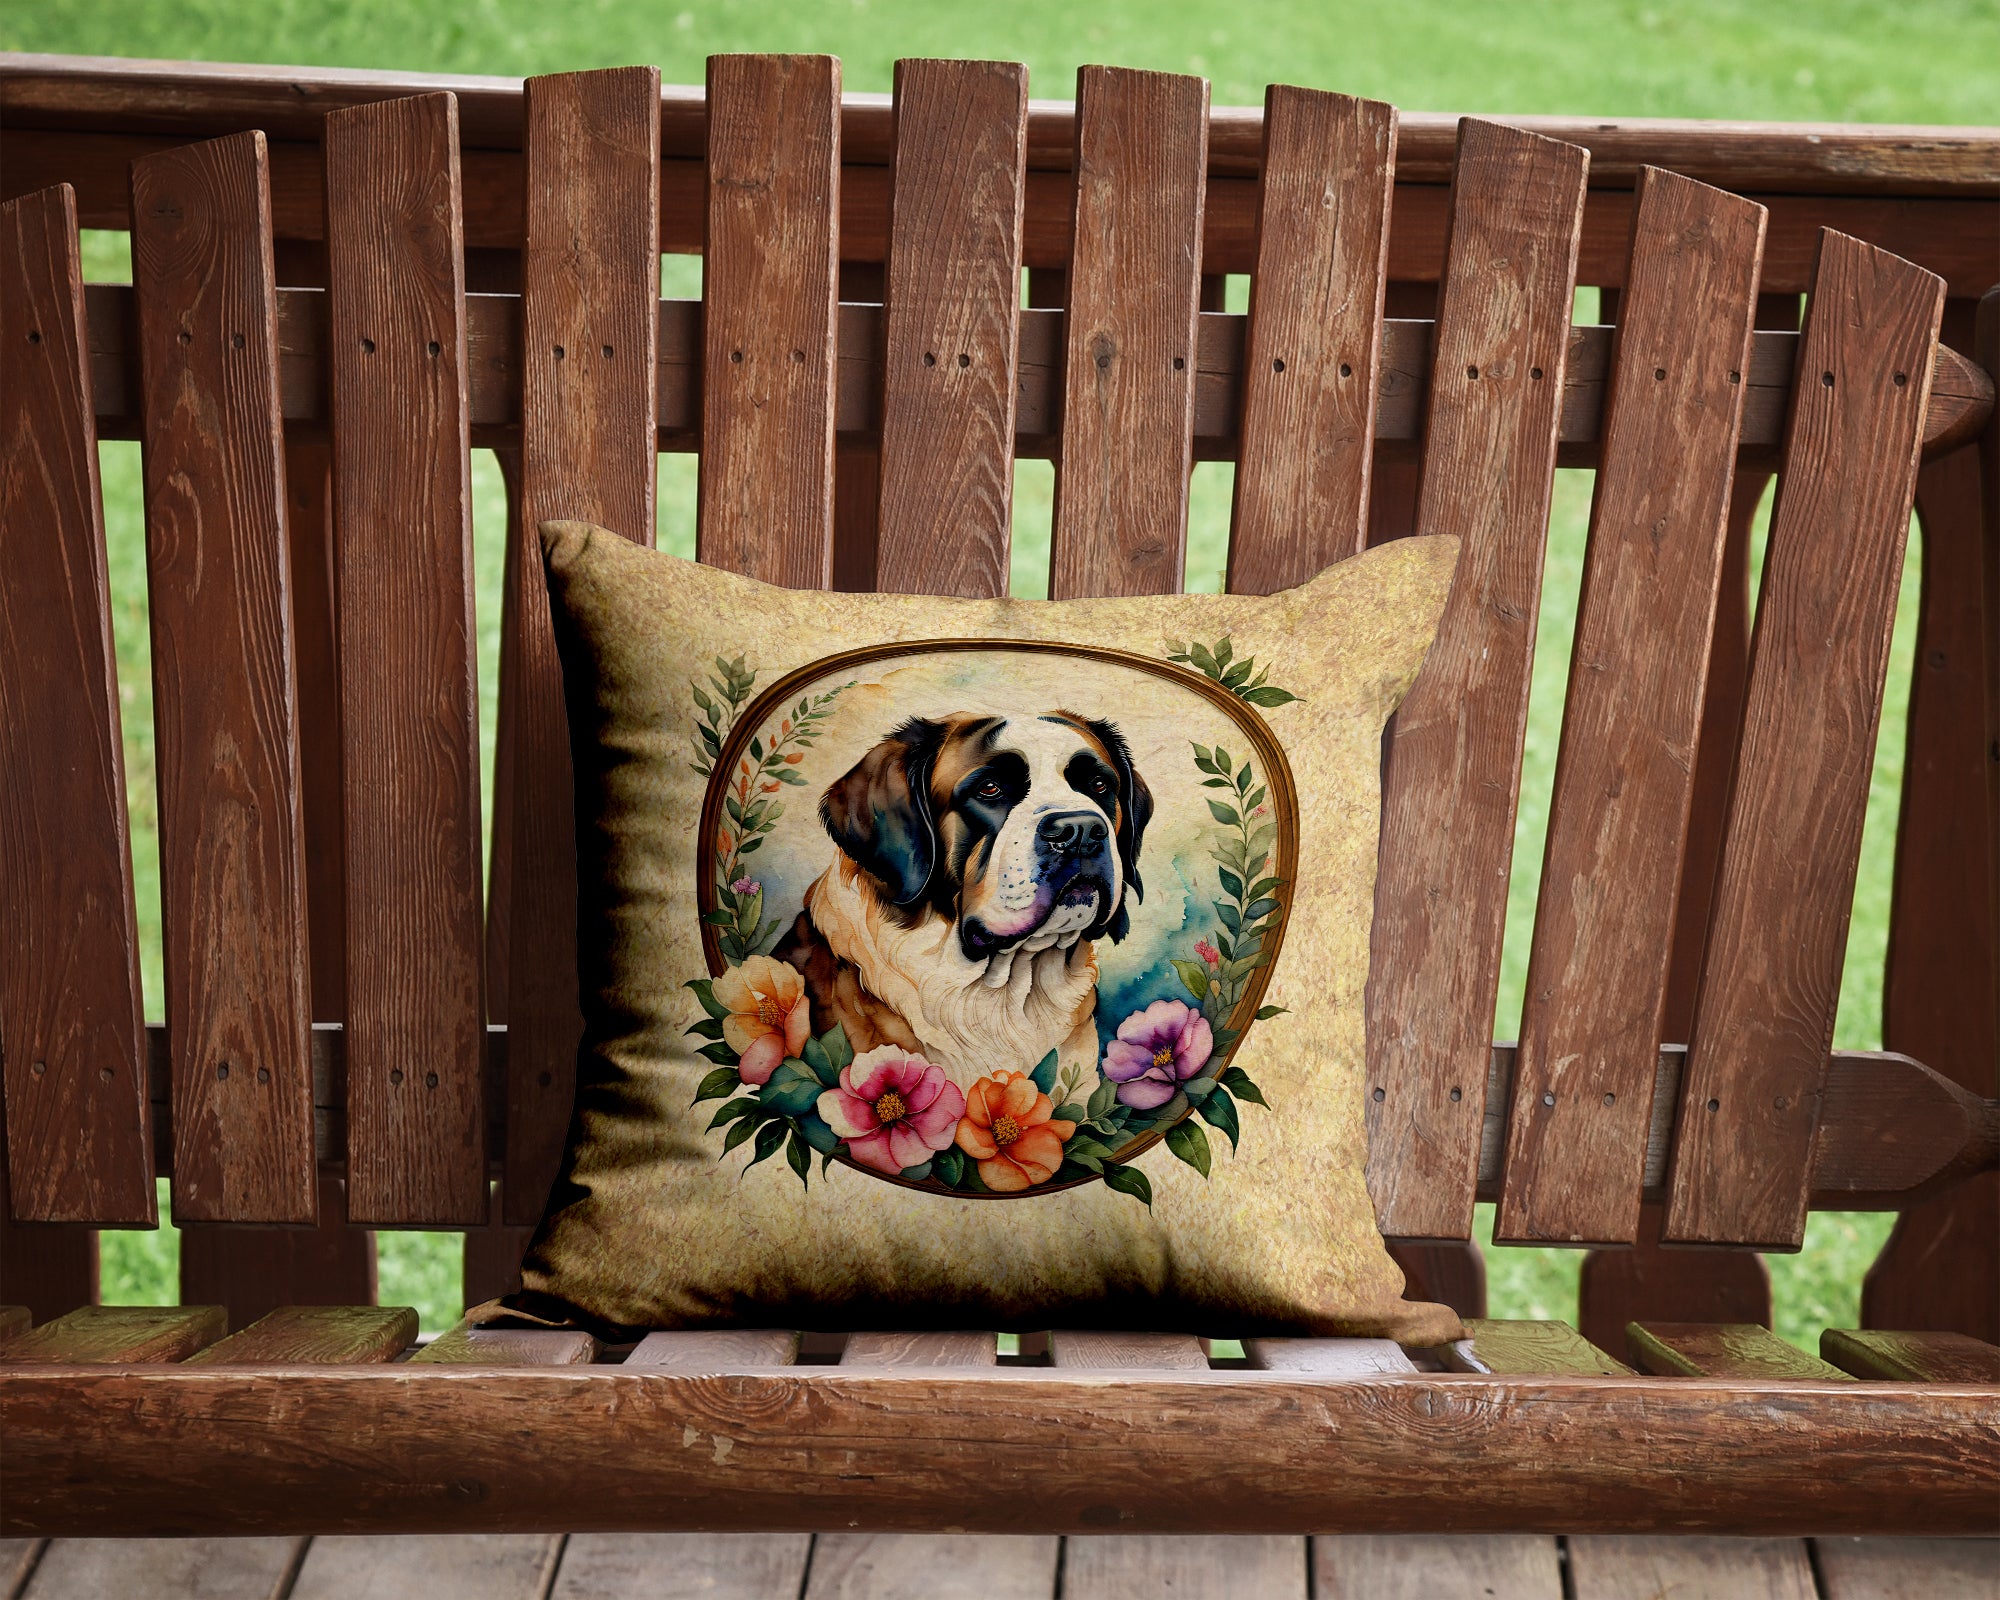 Buy this Saint Bernard and Flowers Fabric Decorative Pillow